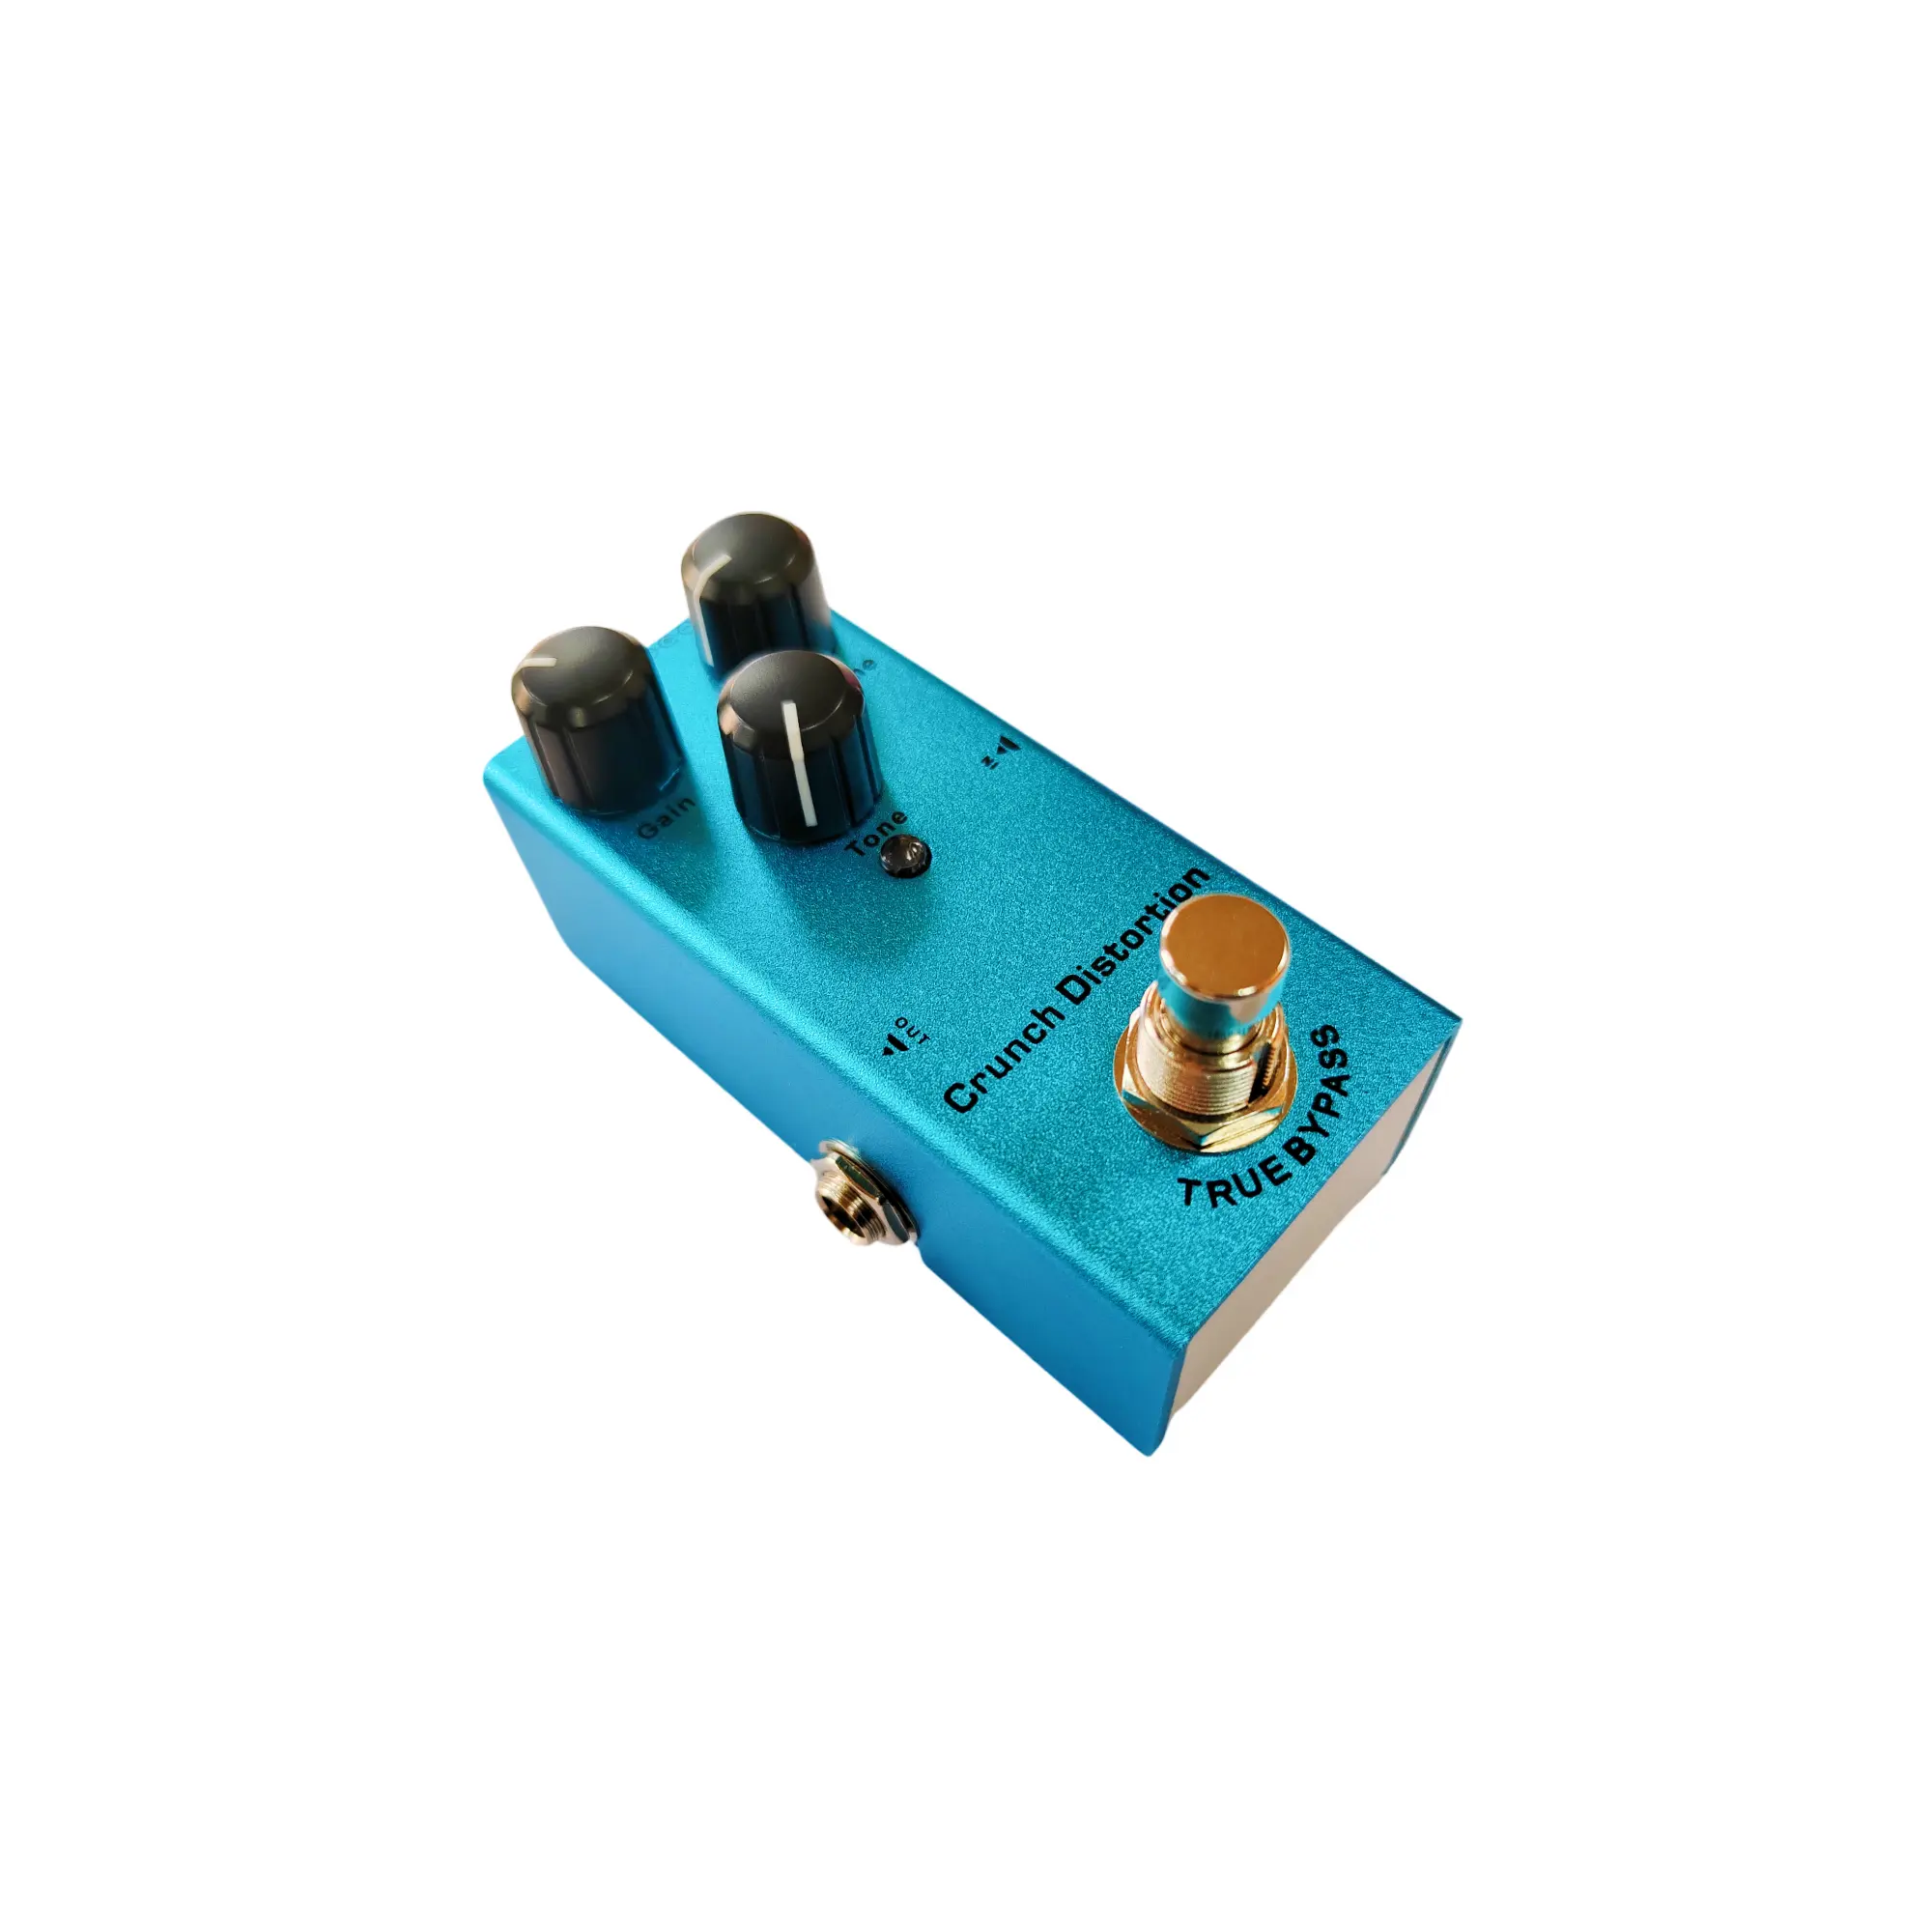 Pedal gitar elektrik papan tunggal Mini LED, Power Supply Crunch 9V efek Portable Amplifier gitar lampu LED tipis